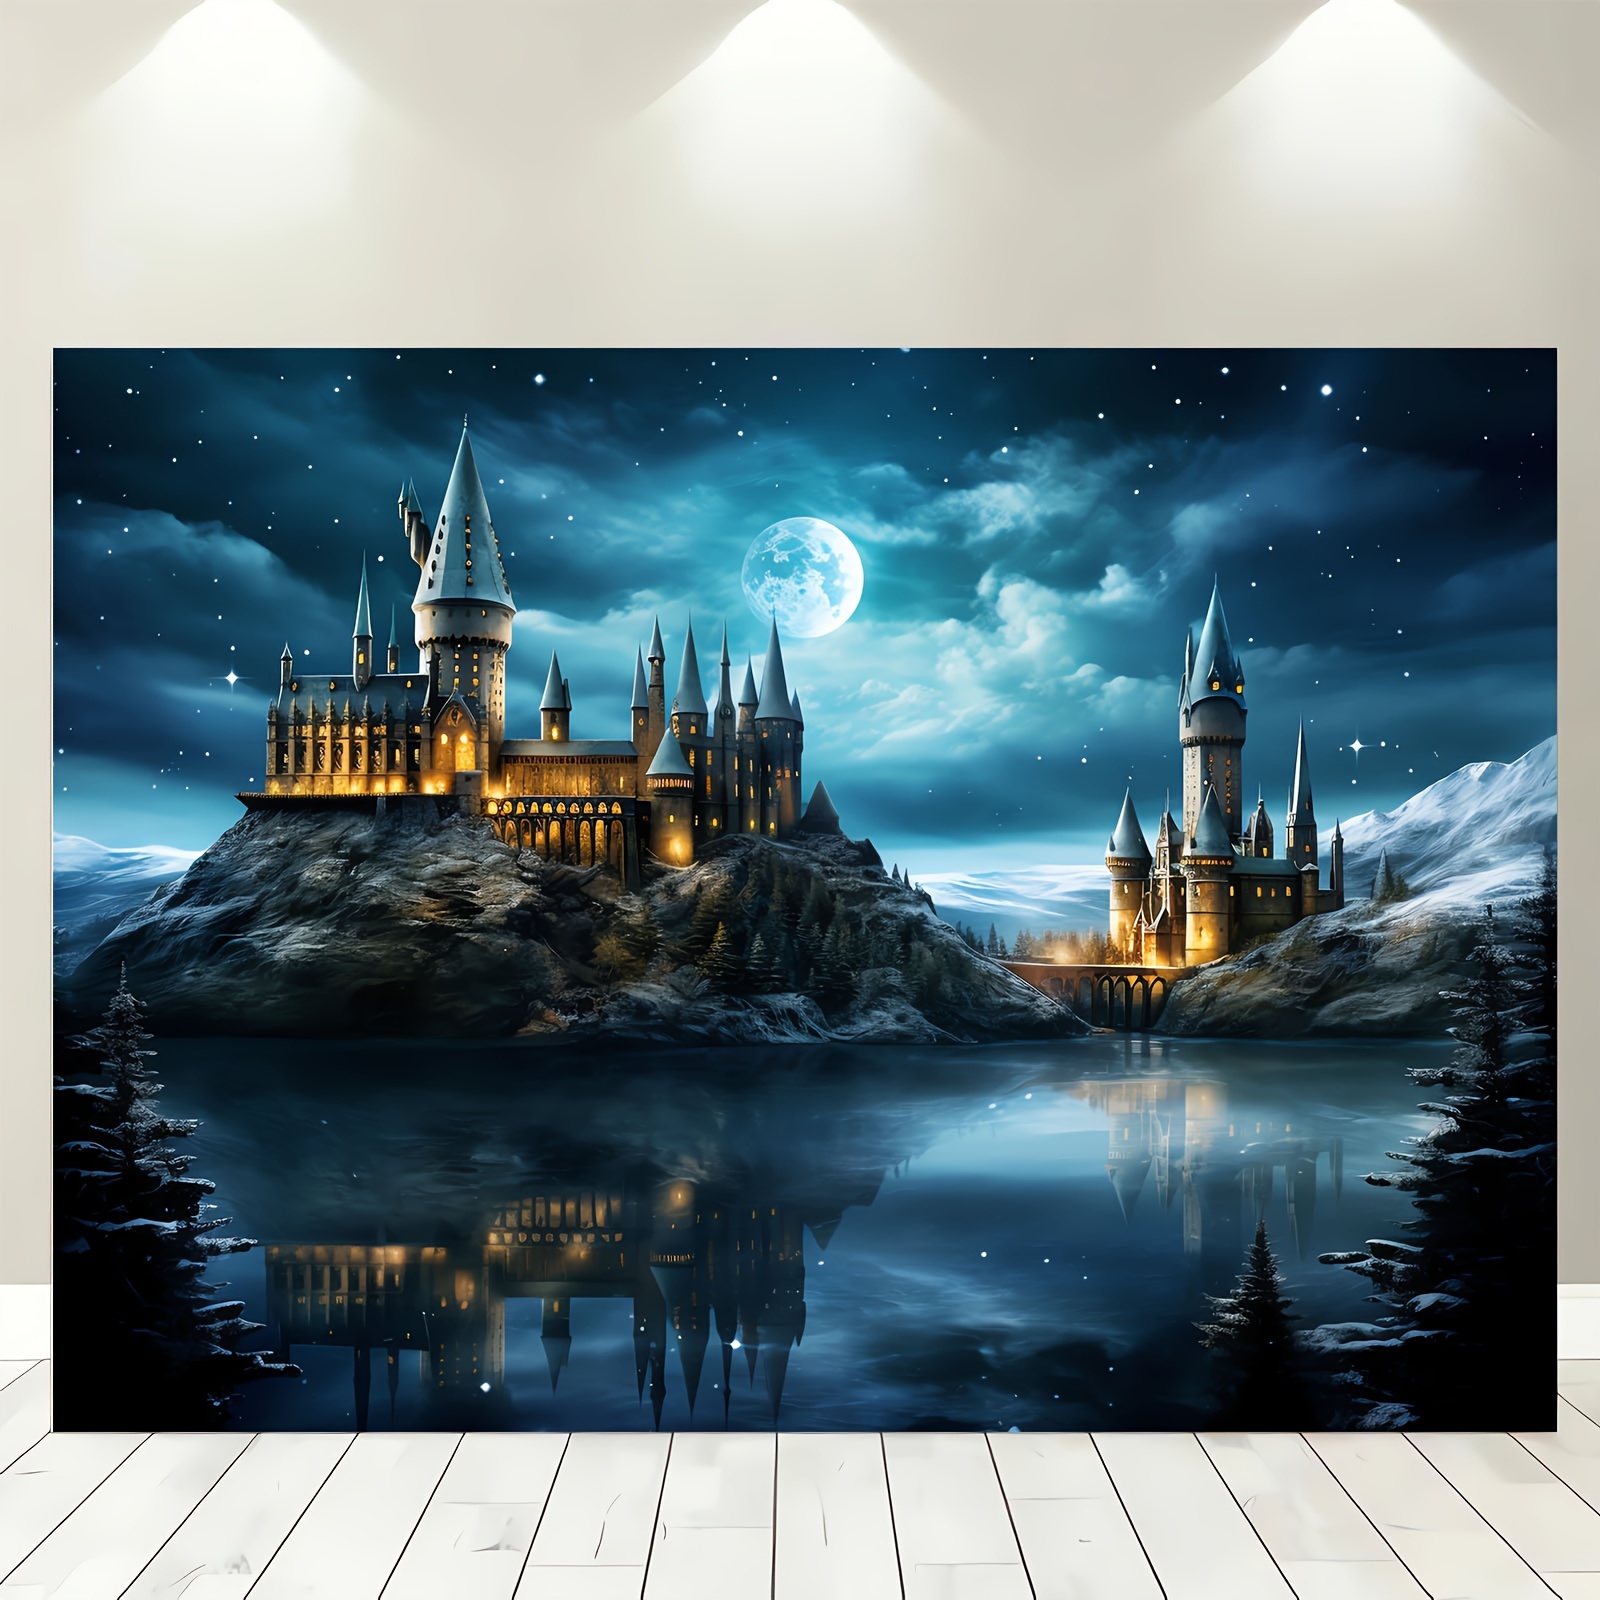 I-1pc Photography Background Props, i-Magic Castle Photography Background Wizard World Night Sky Moon Lightning Party Decoration Photo Props